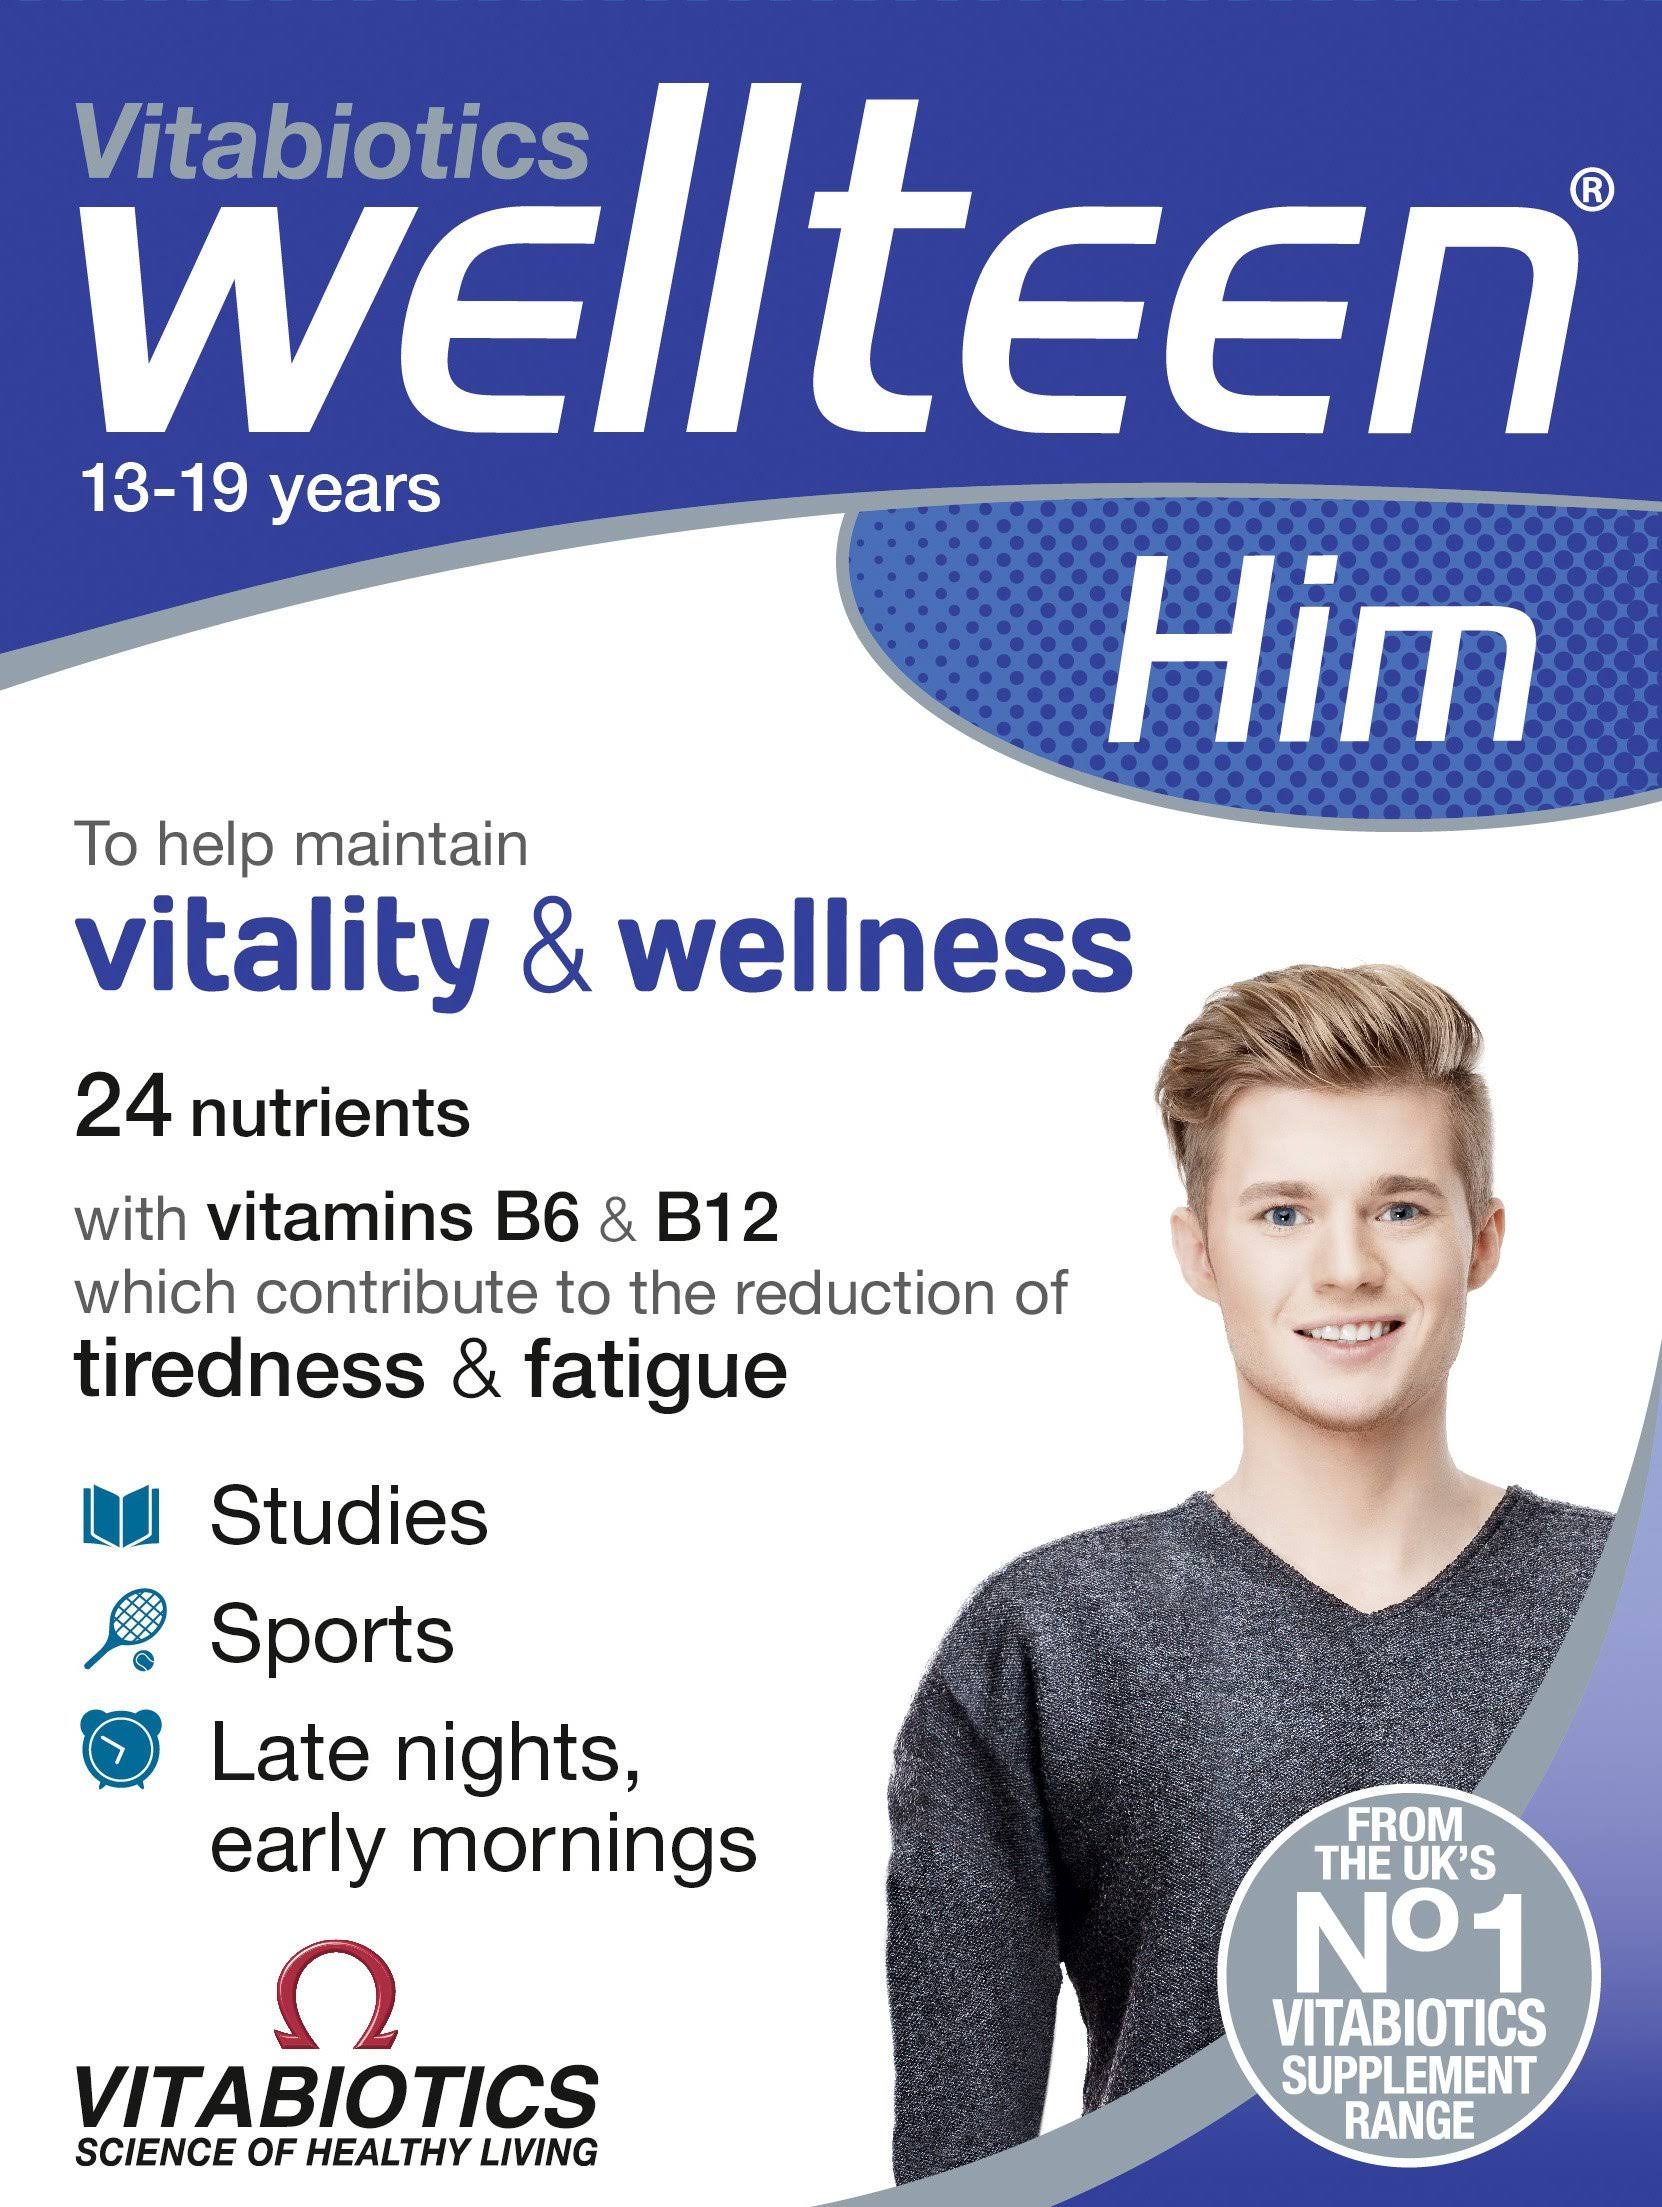 Vitabiotics Wellteen Him Original Supplement - 30 Tablets